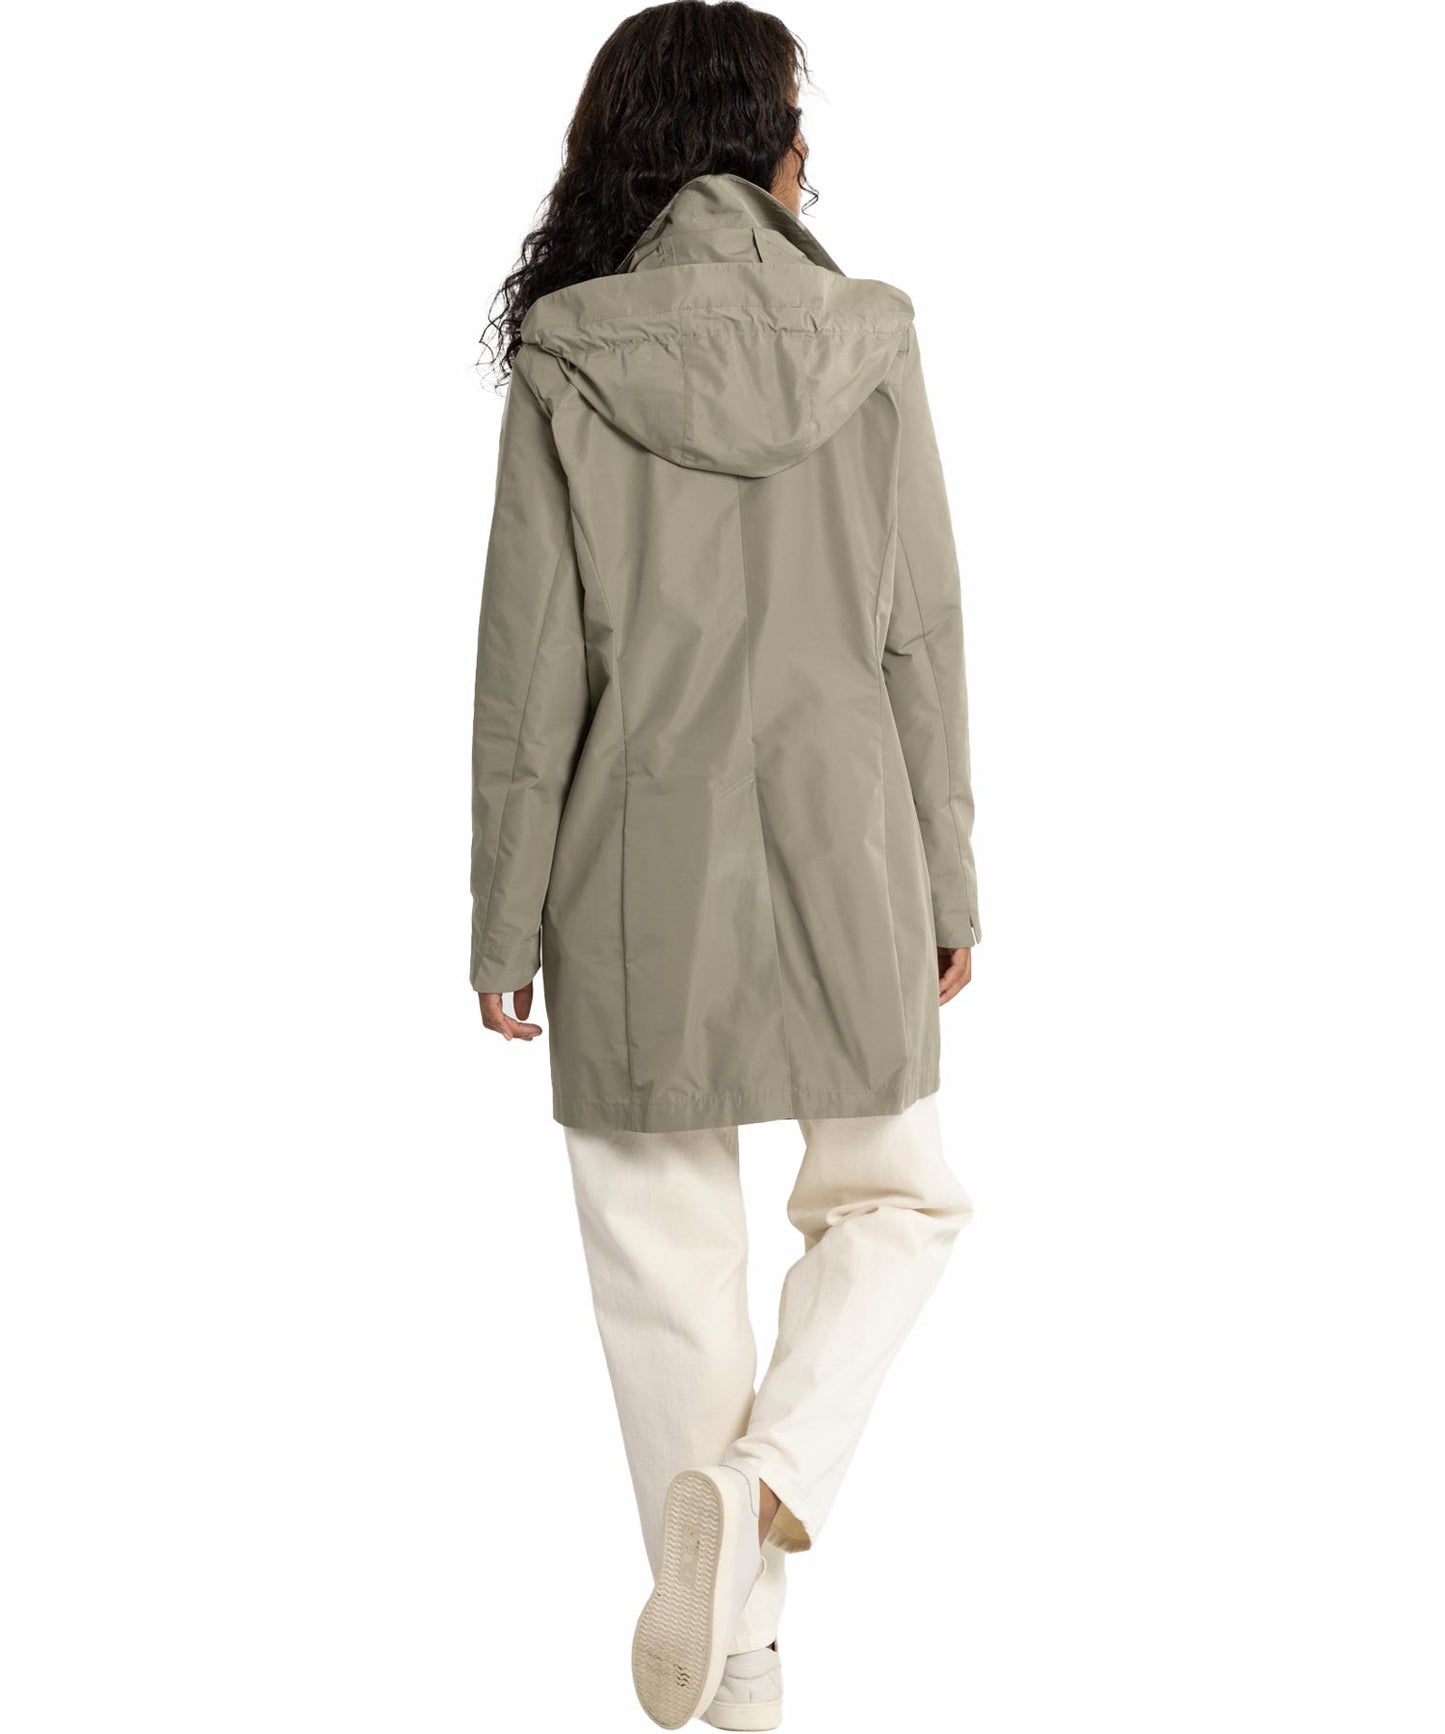 anorak style raincoat